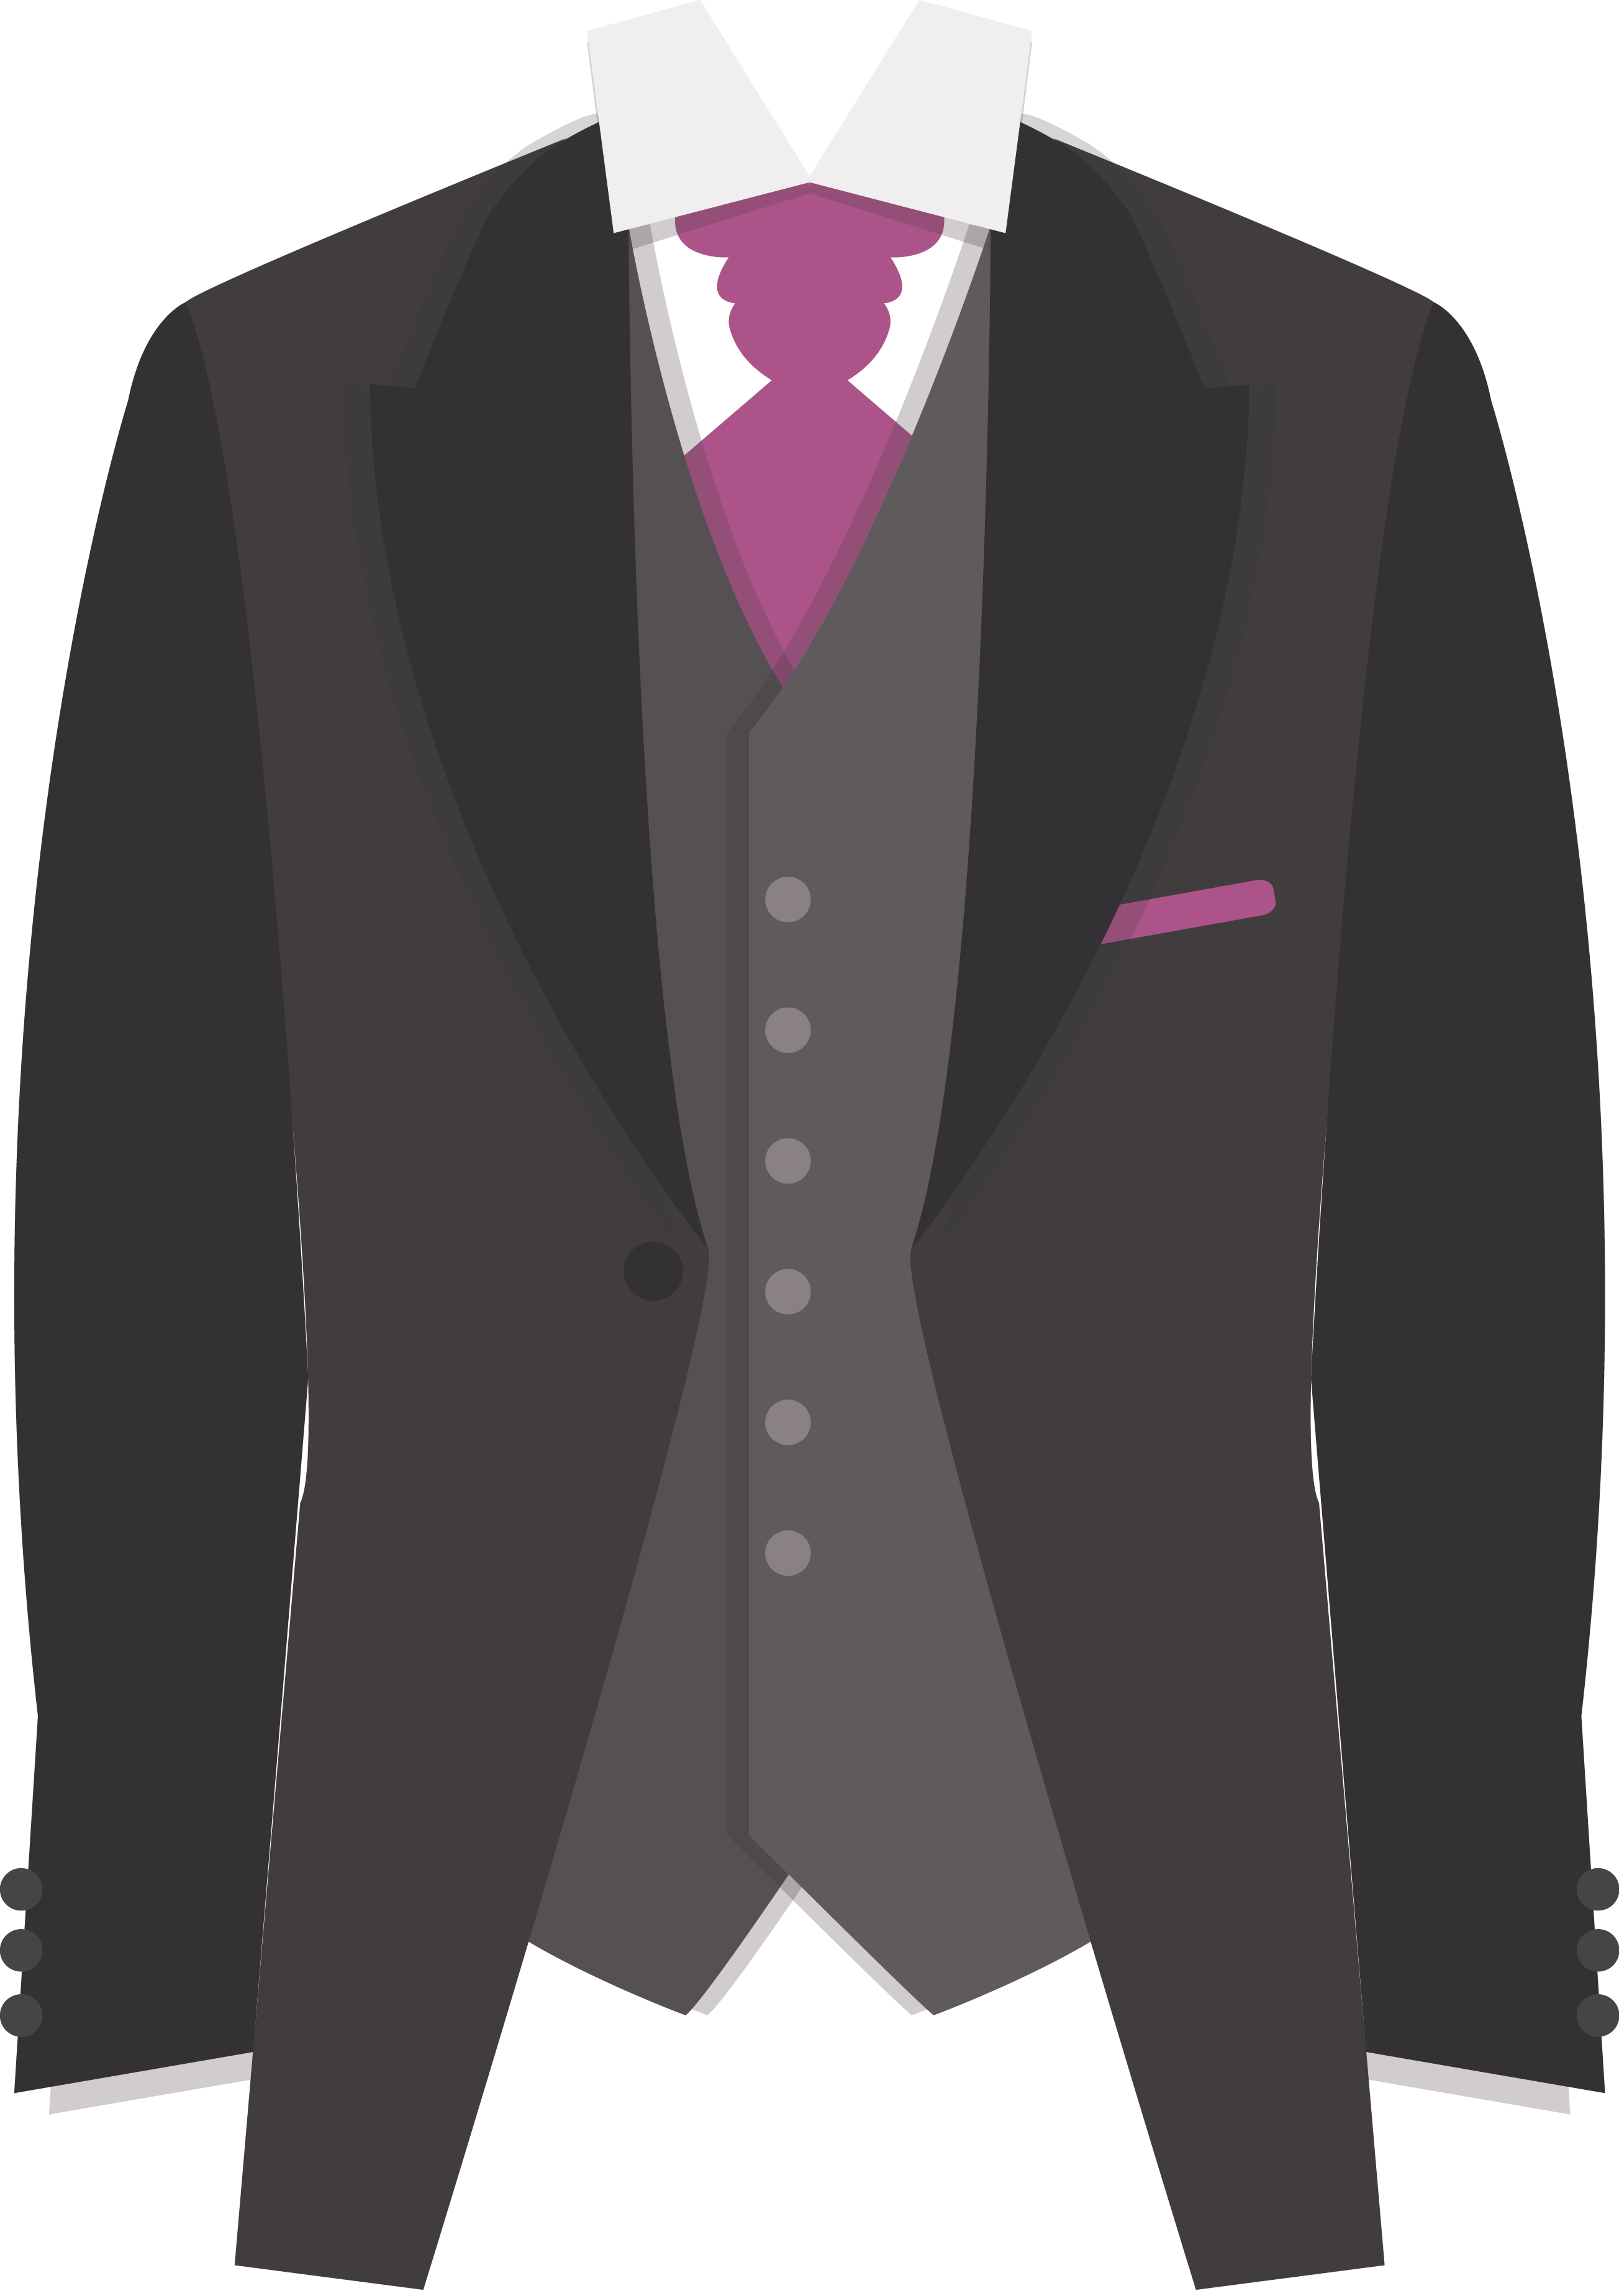 Formal Suit PNG Transparent Images Free Download, Vector Files